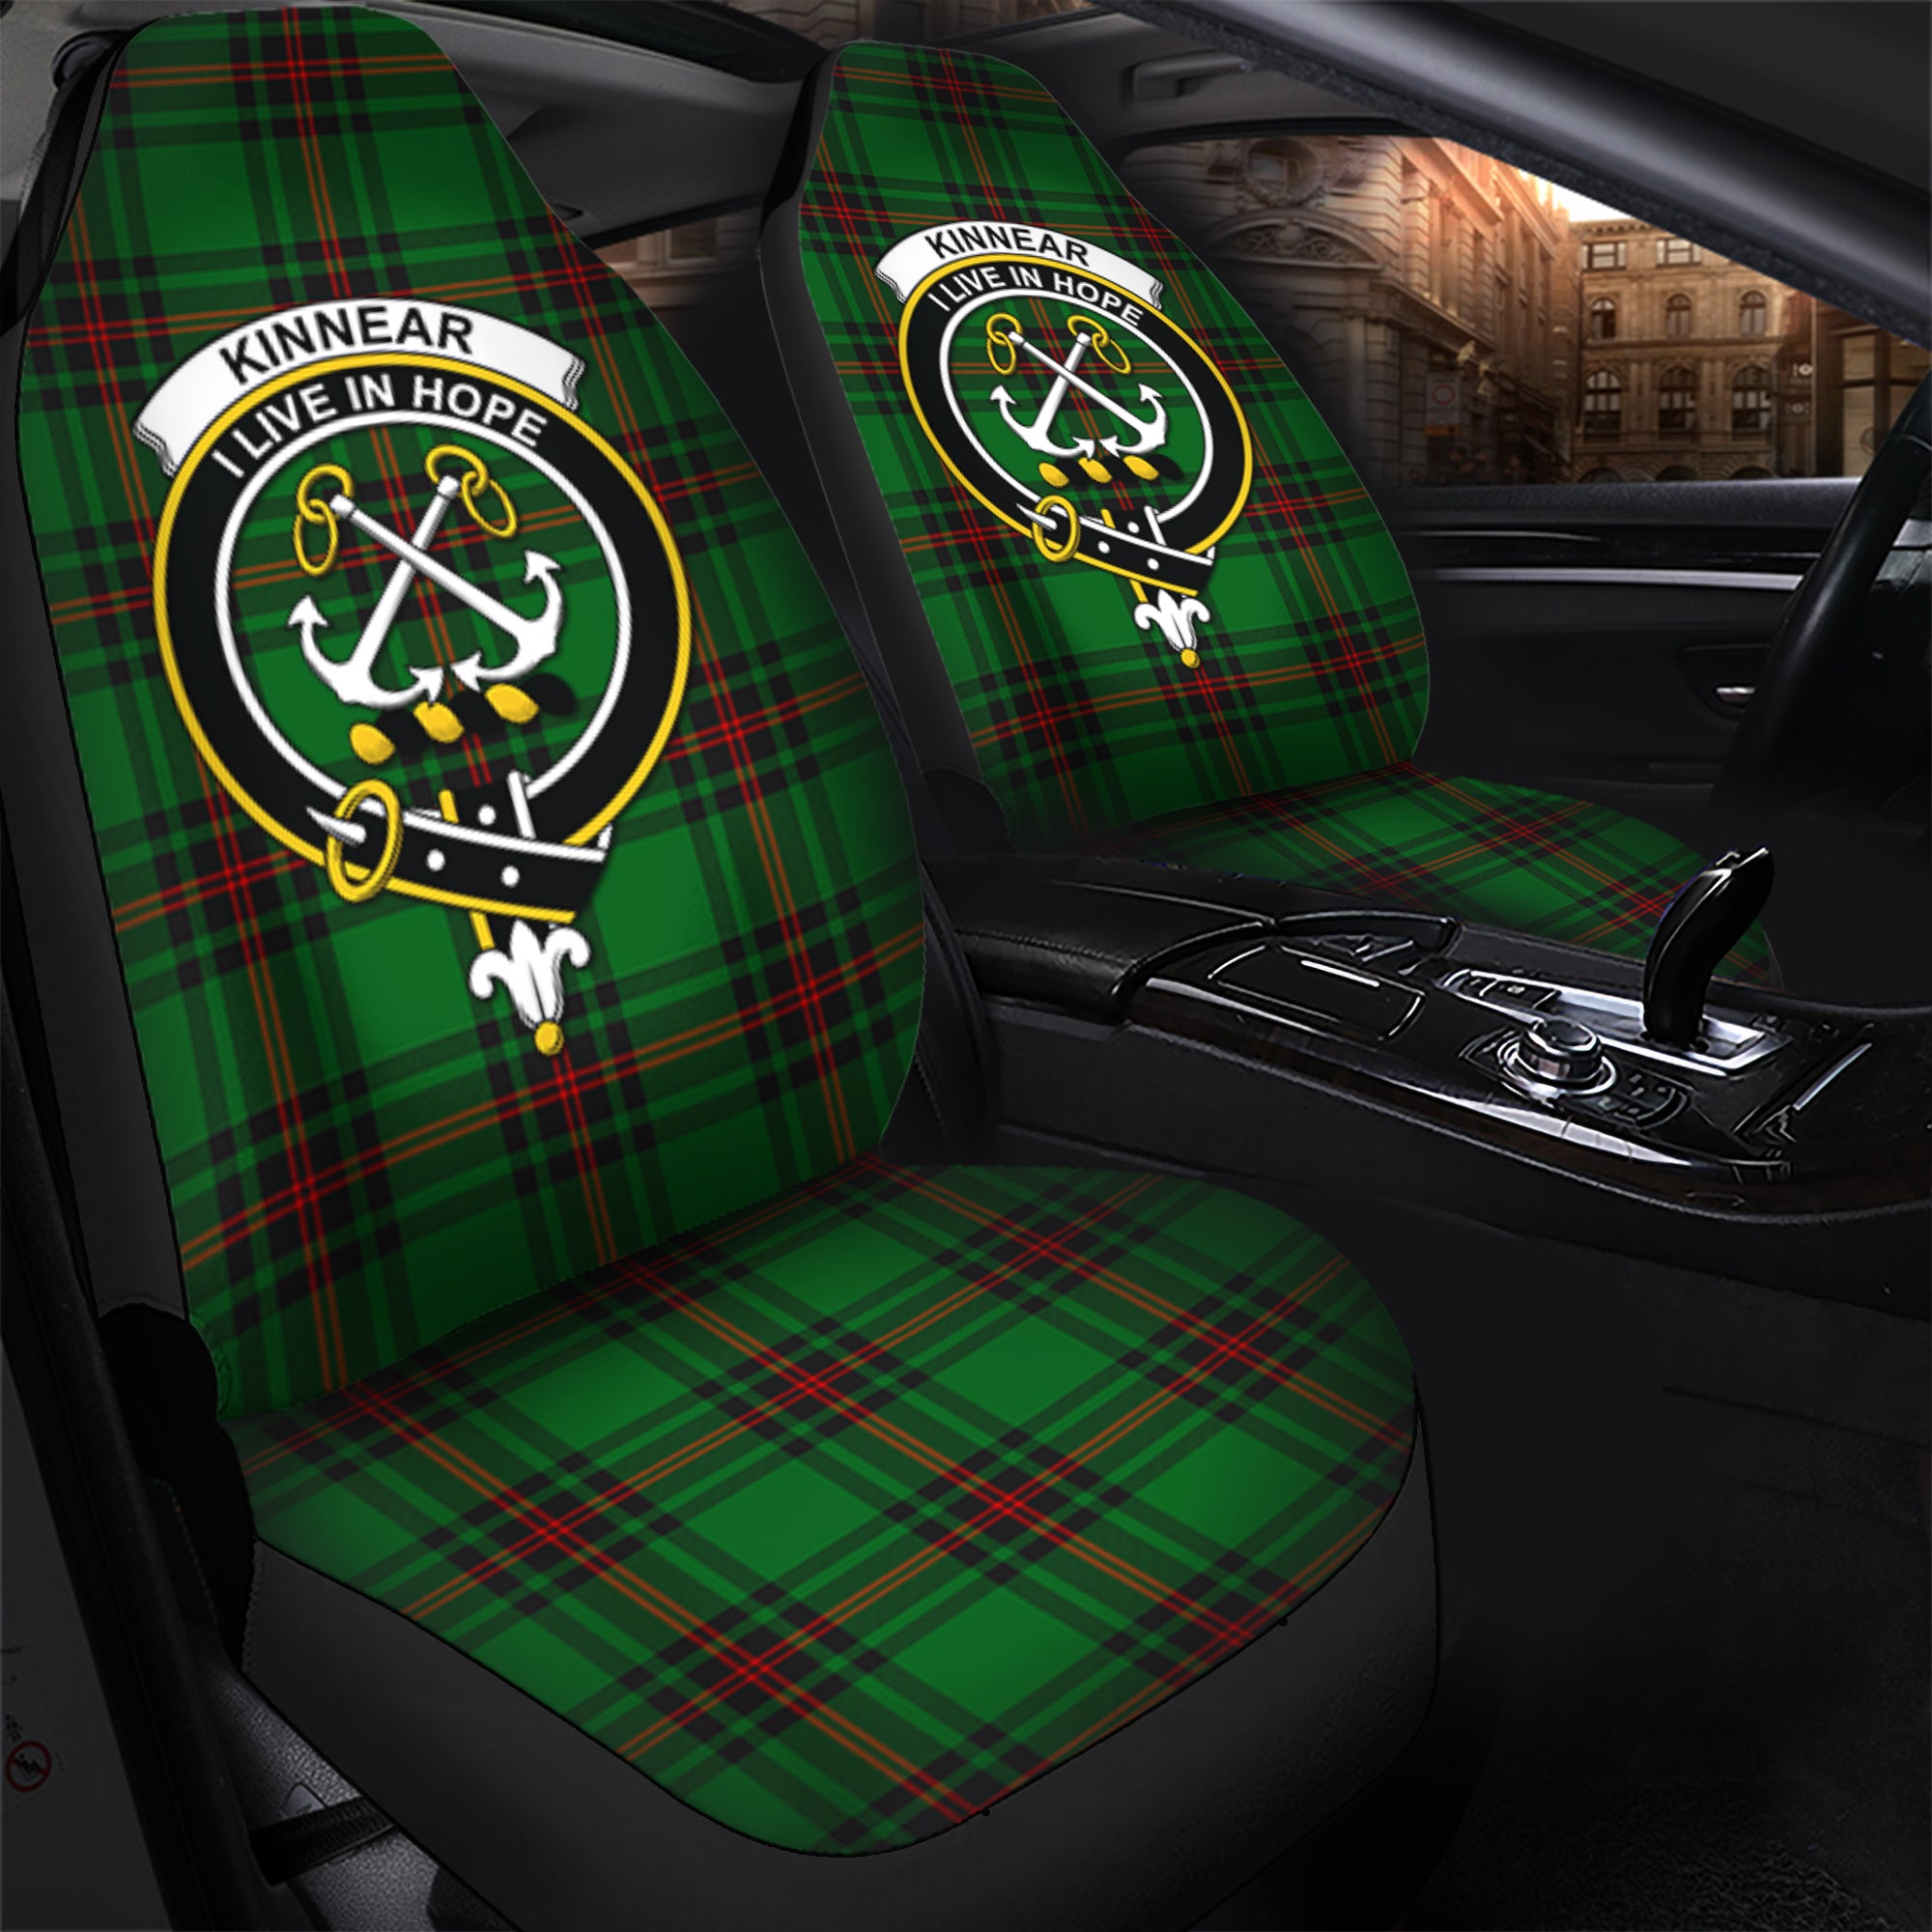 Kinnear Clan Tartan Car Seat Cover, Family Crest Tartan Seat Cover TS23